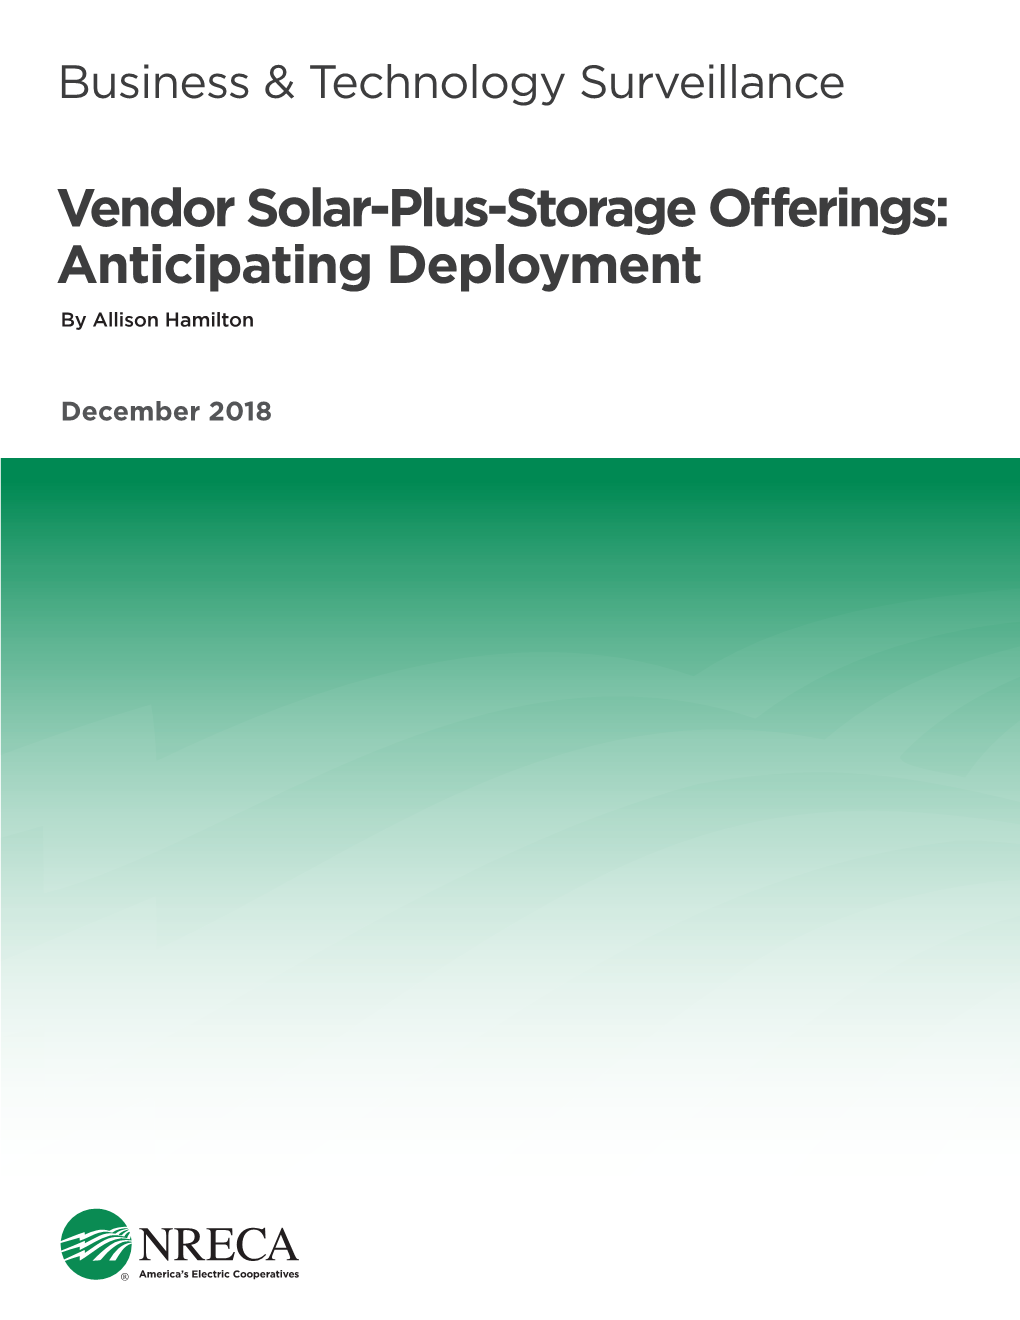 Vendor Solar-Plus-Storage Offerings: Anticipating Deployment by Allison Hamilton